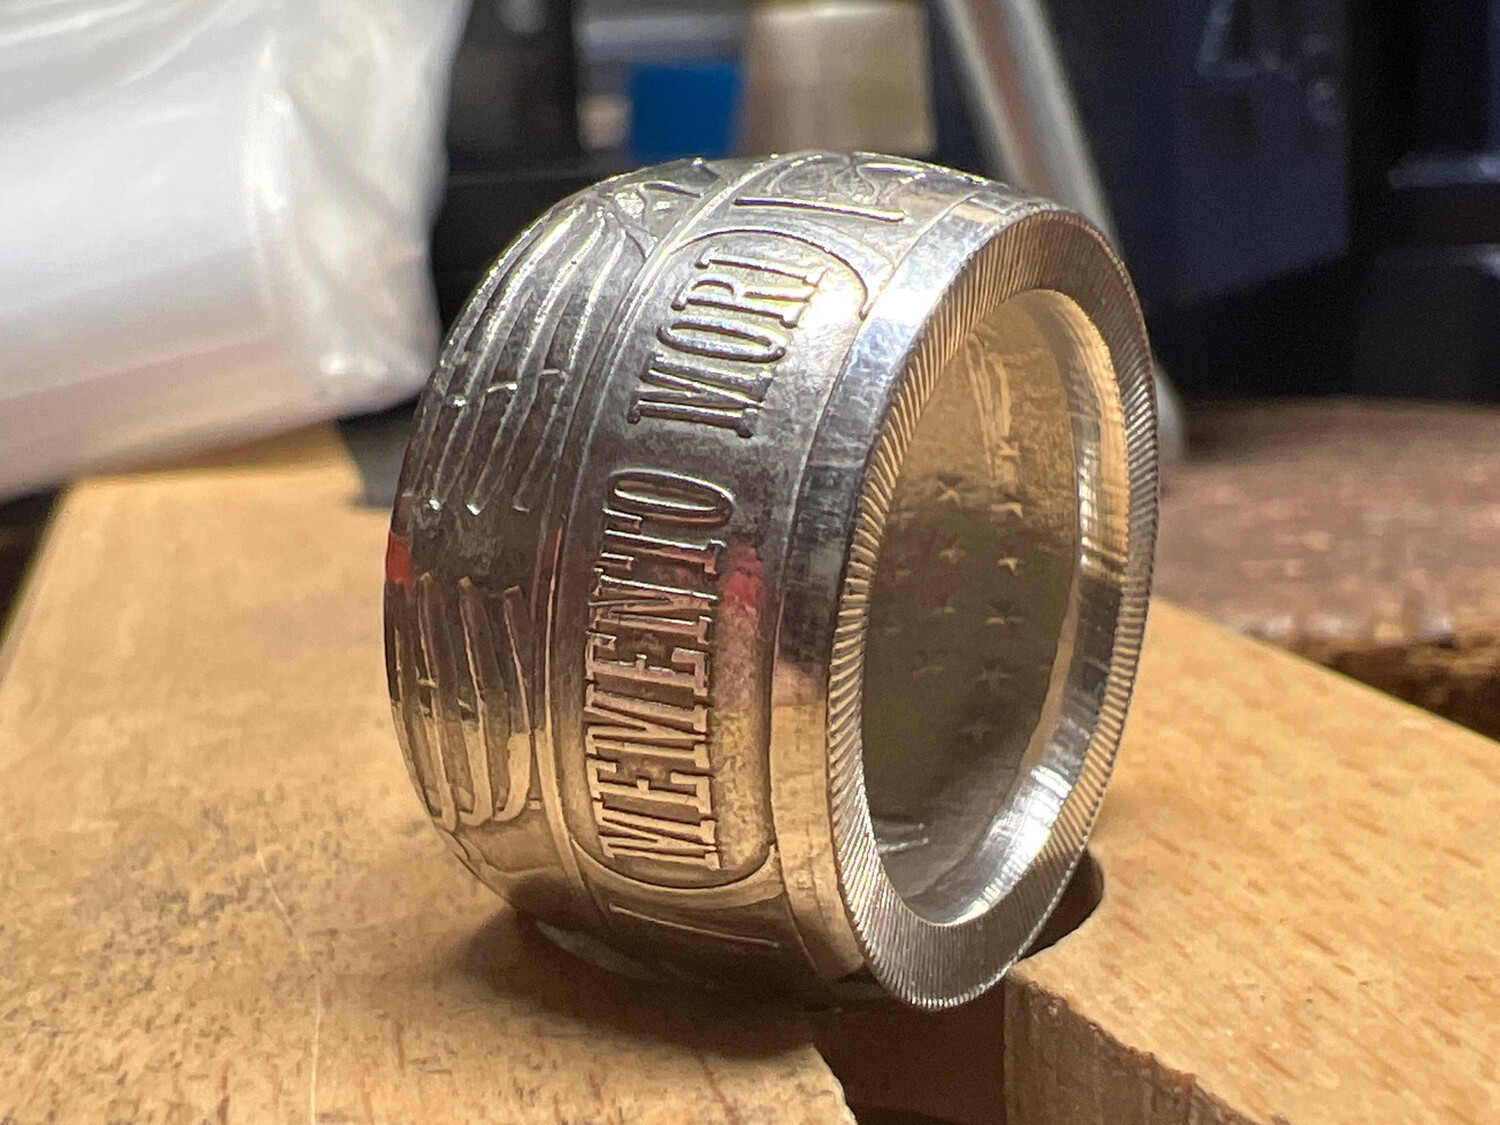  Memento Mori Fine Silver Coin Ring